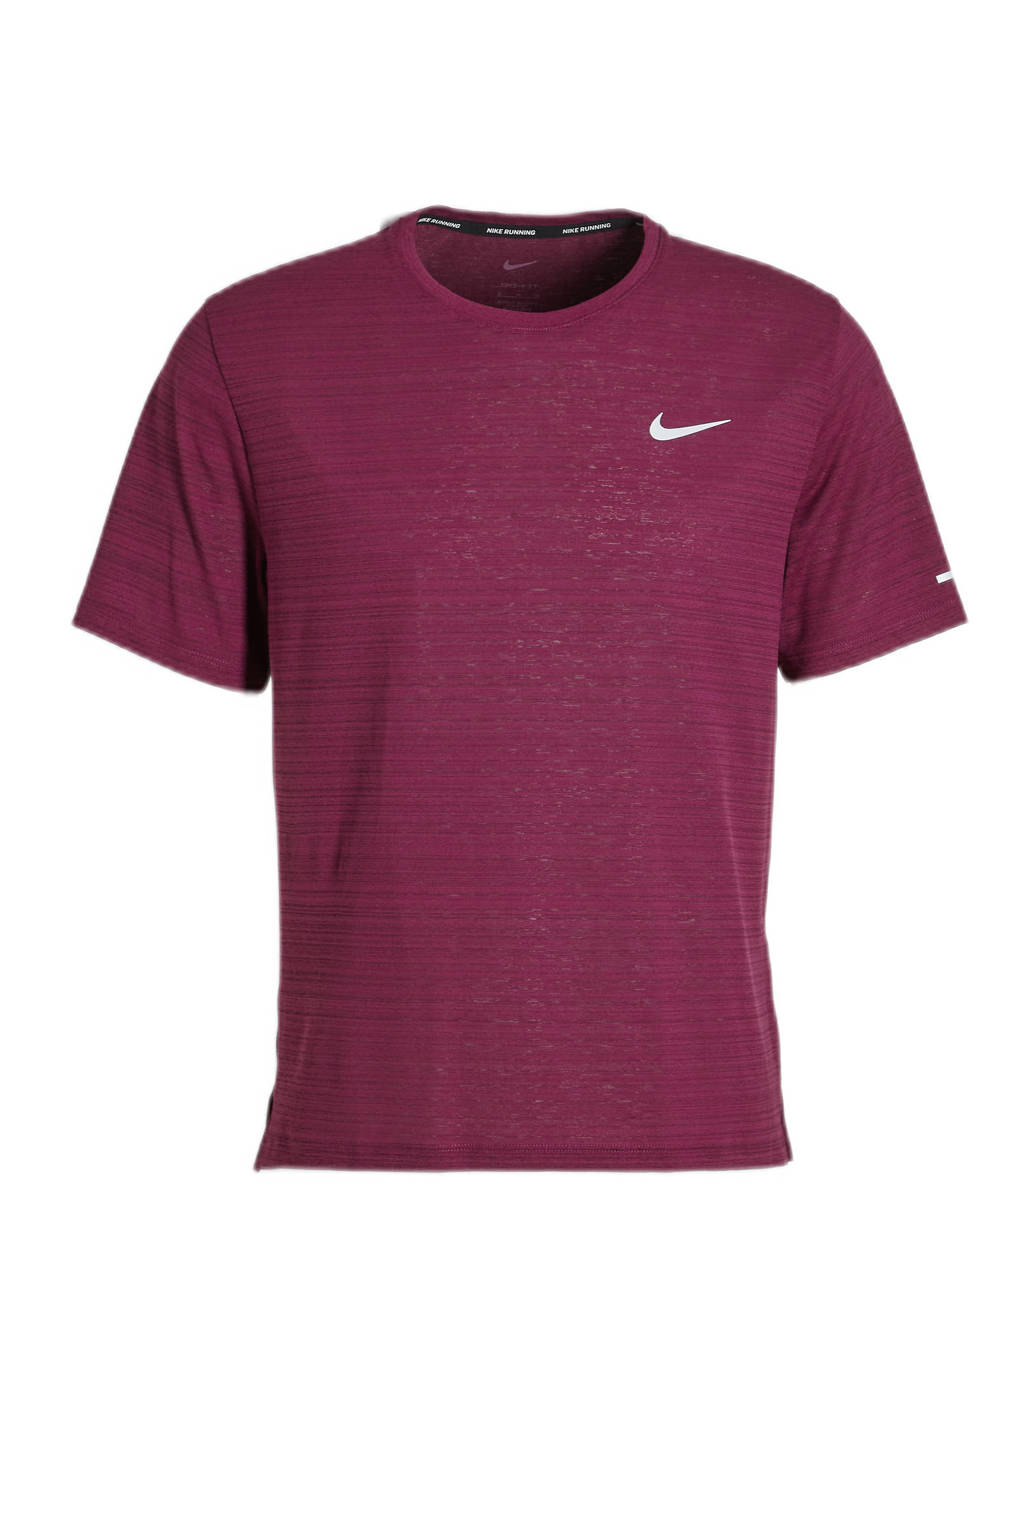 Nike   hardloopshirt paars